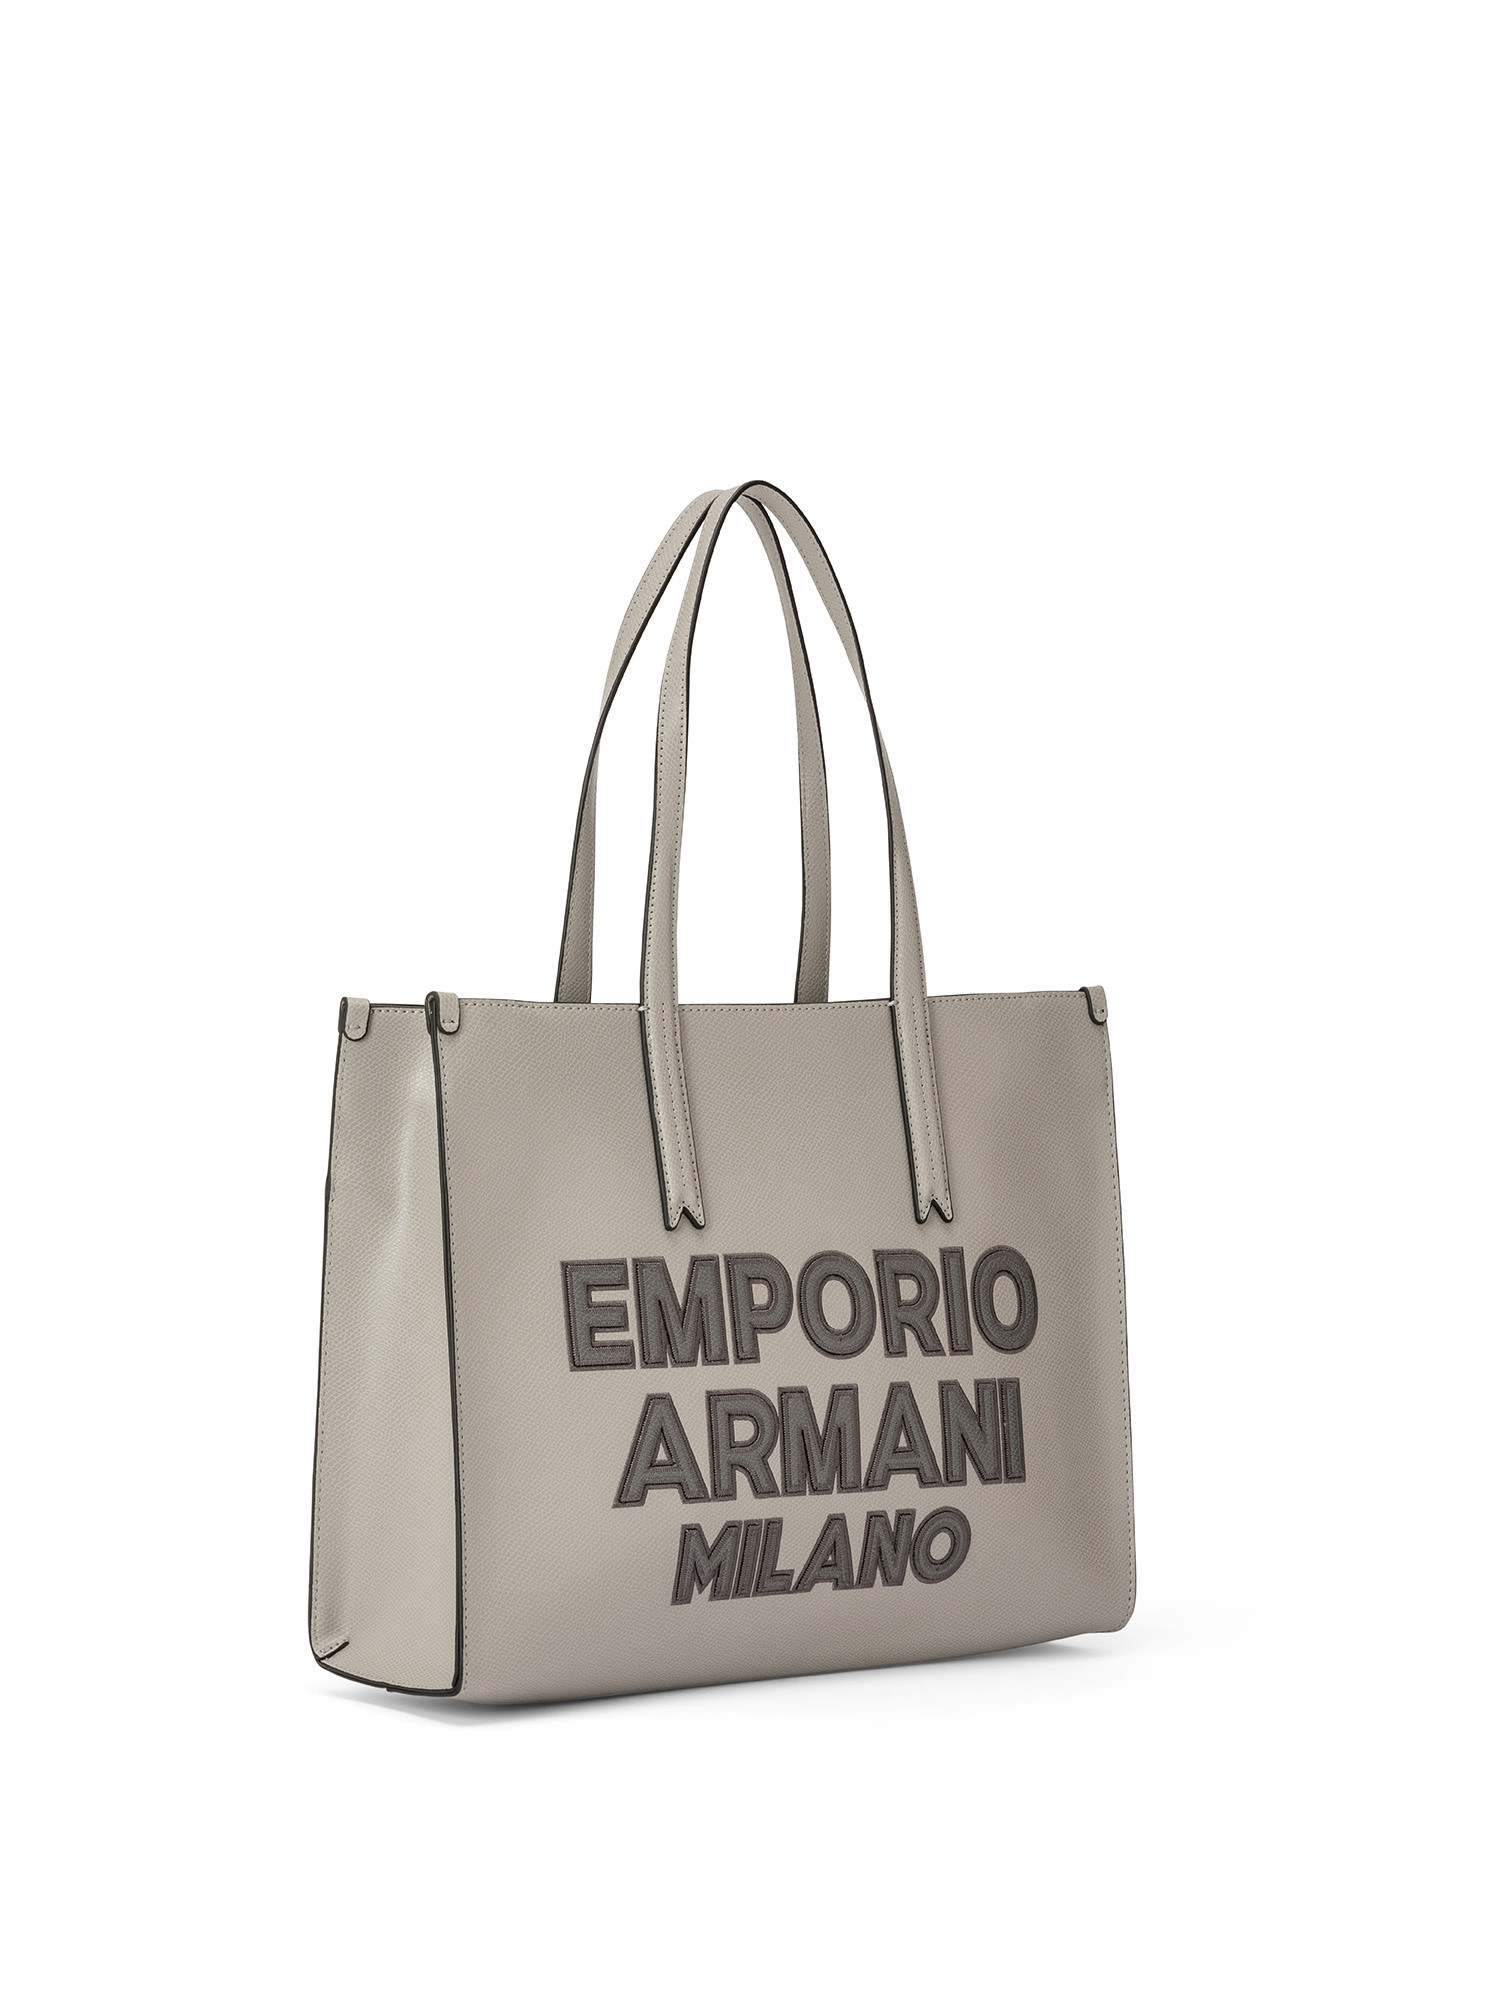 Emporio Armani - Borsa con ricamo logo, Grigio, large image number 1